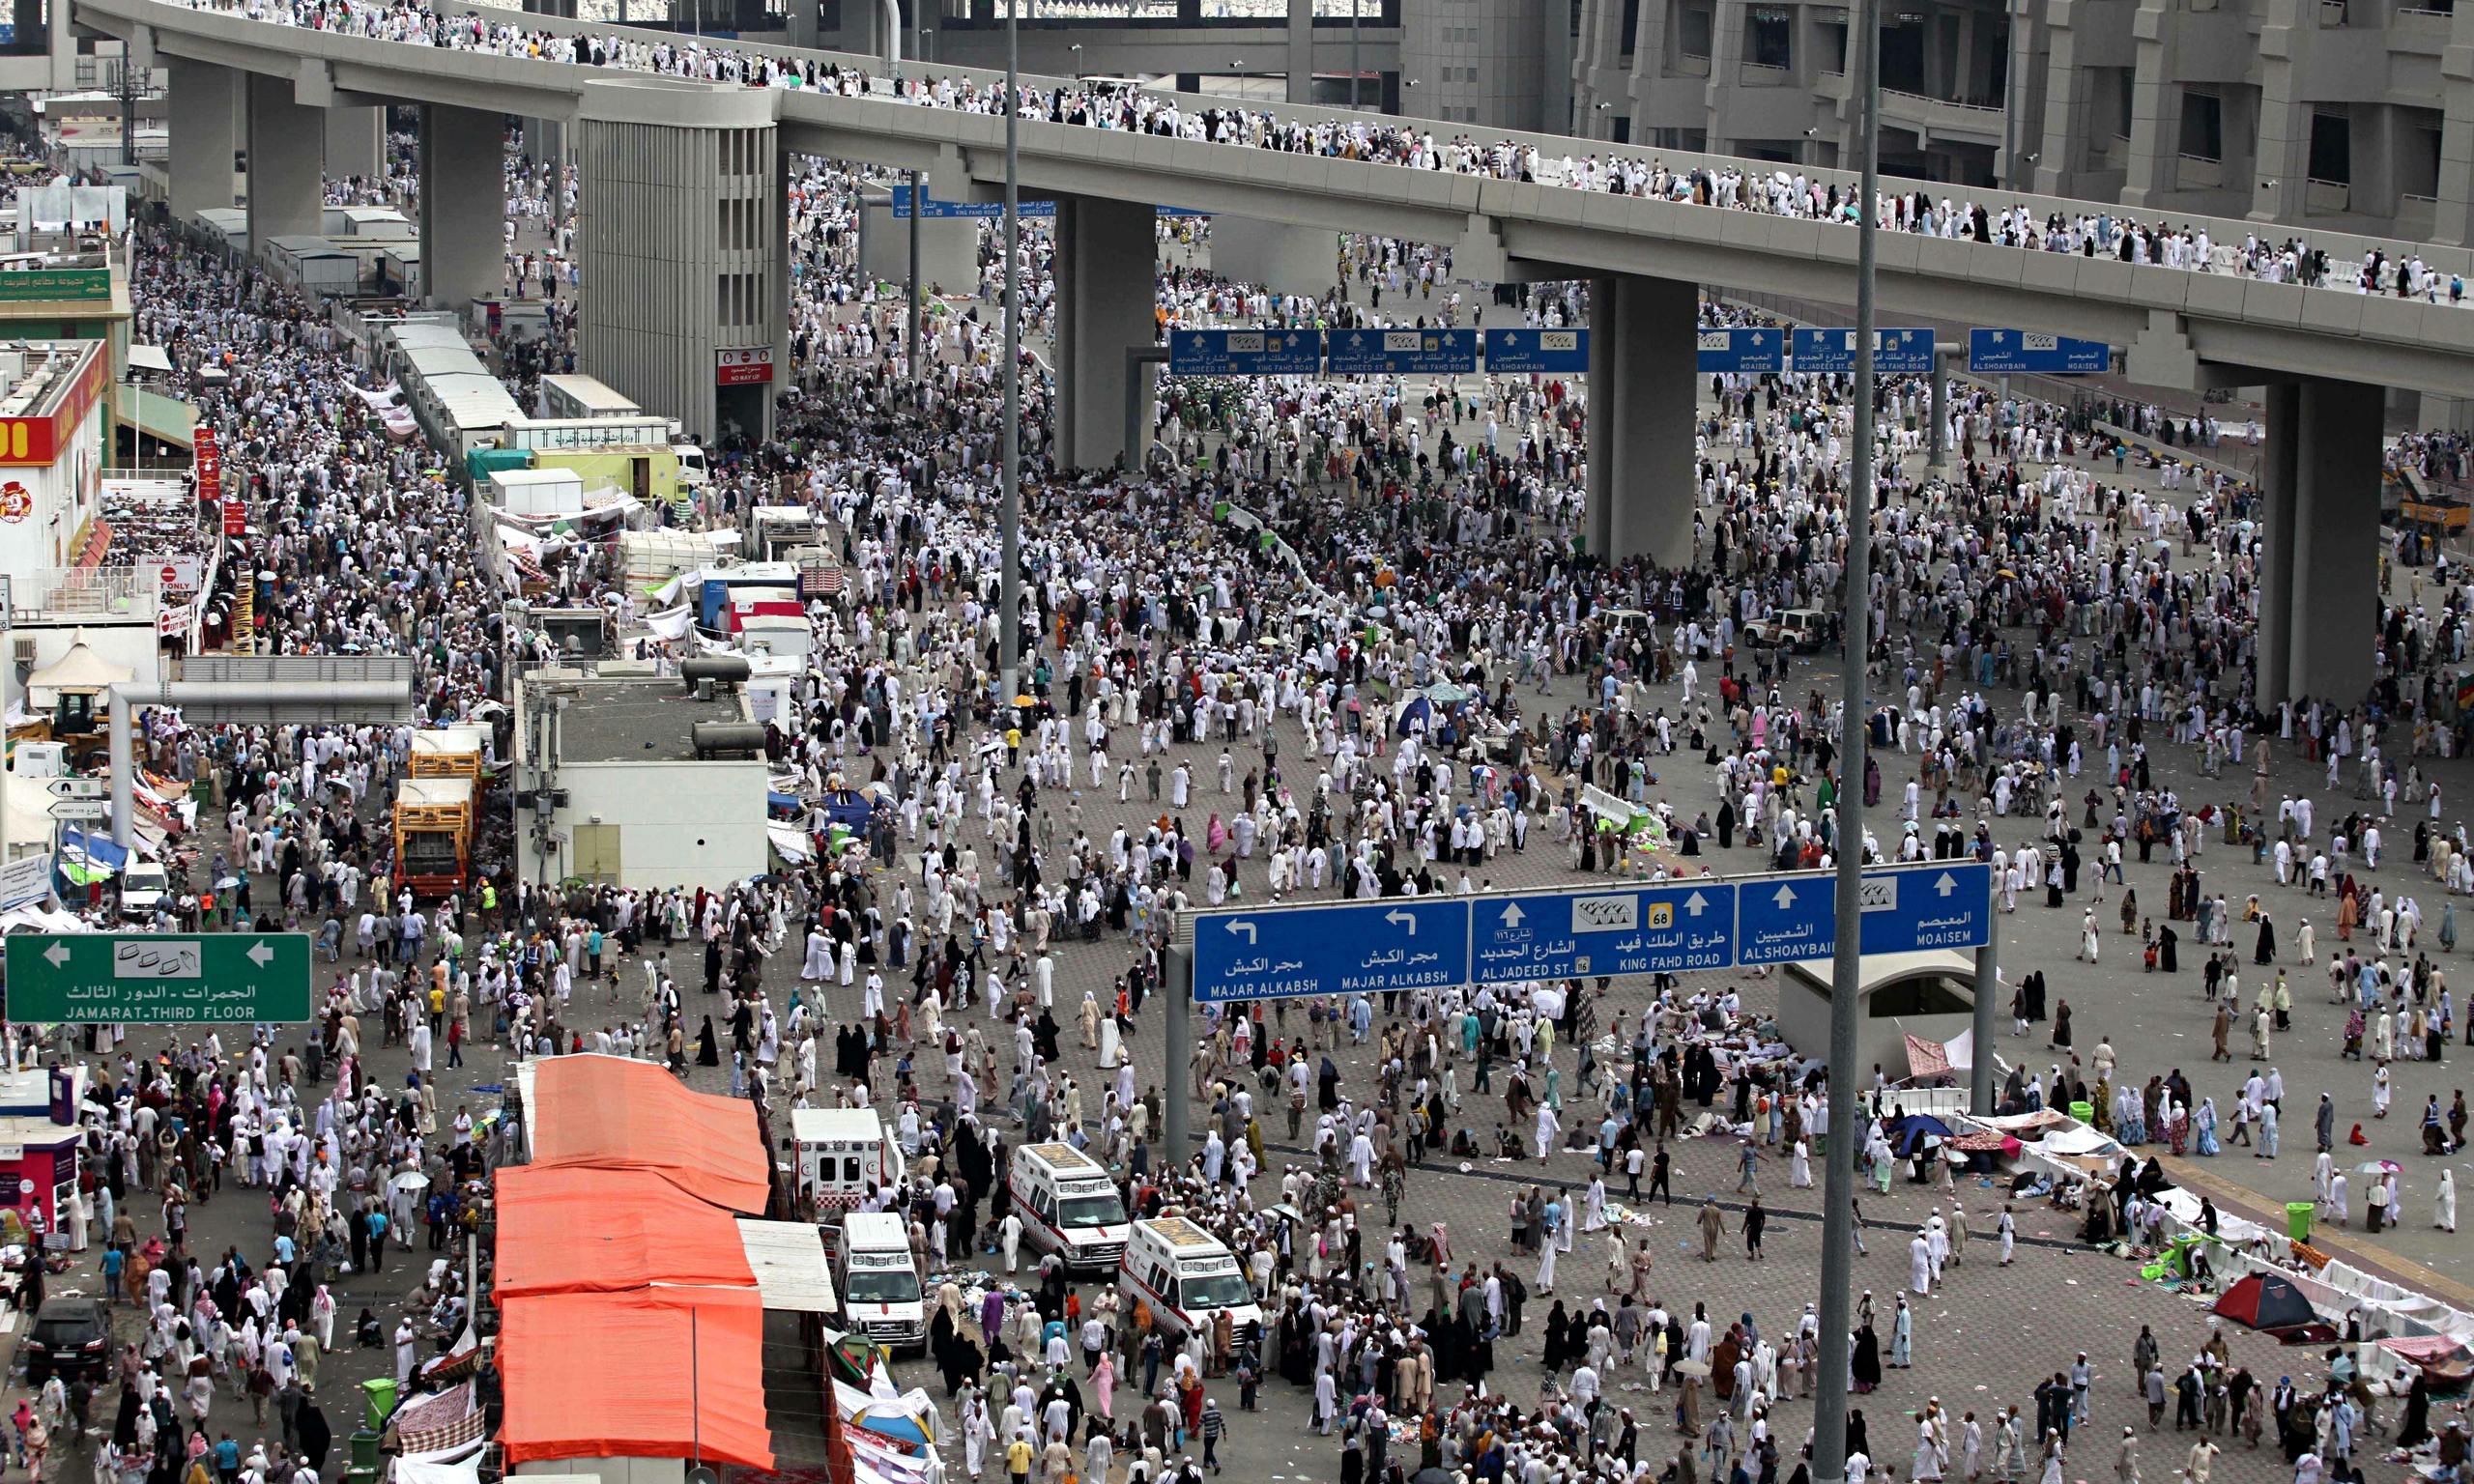 Hajj pilgrimage to Mecca epidemic-free, says Saudi Arabia | World news | The Guardian2560 x 1536